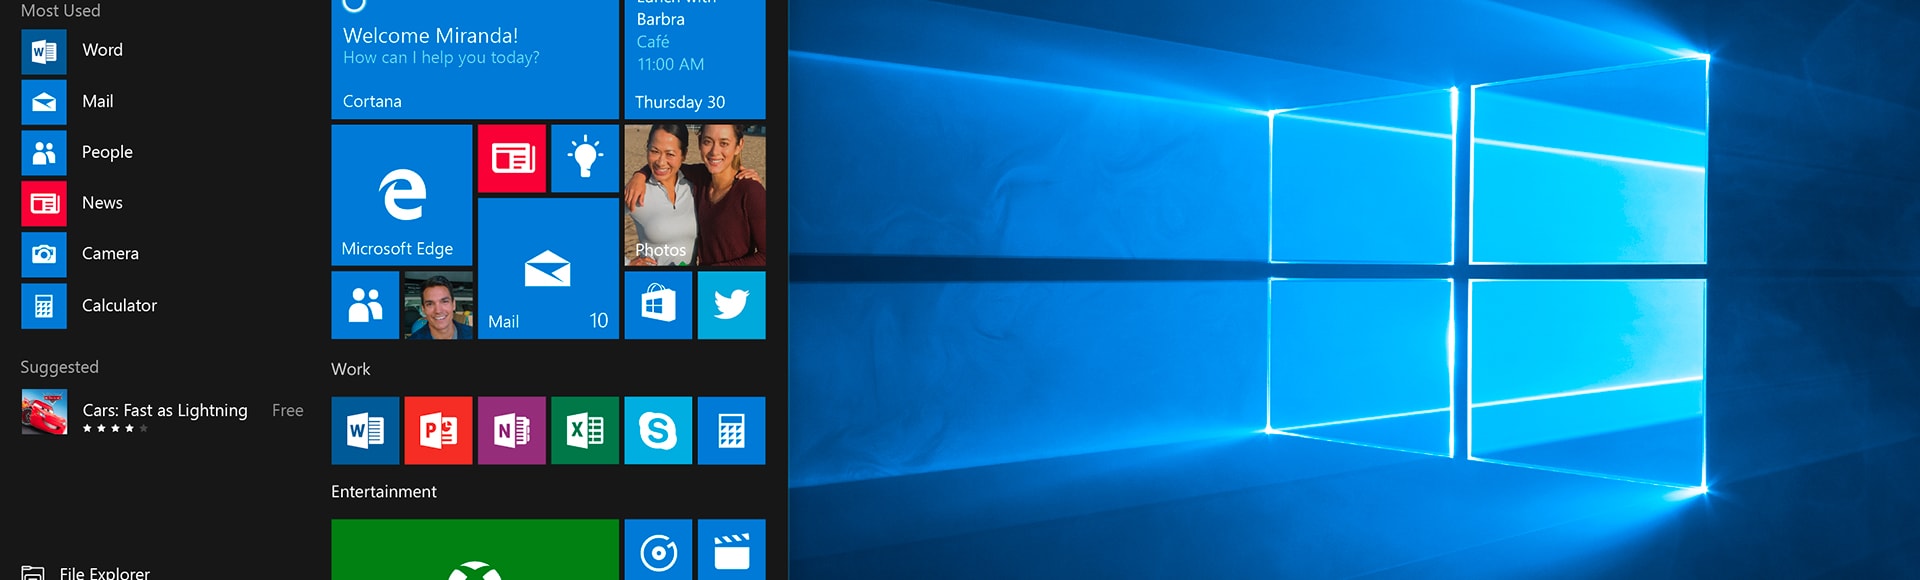 Configuration de Windows 10